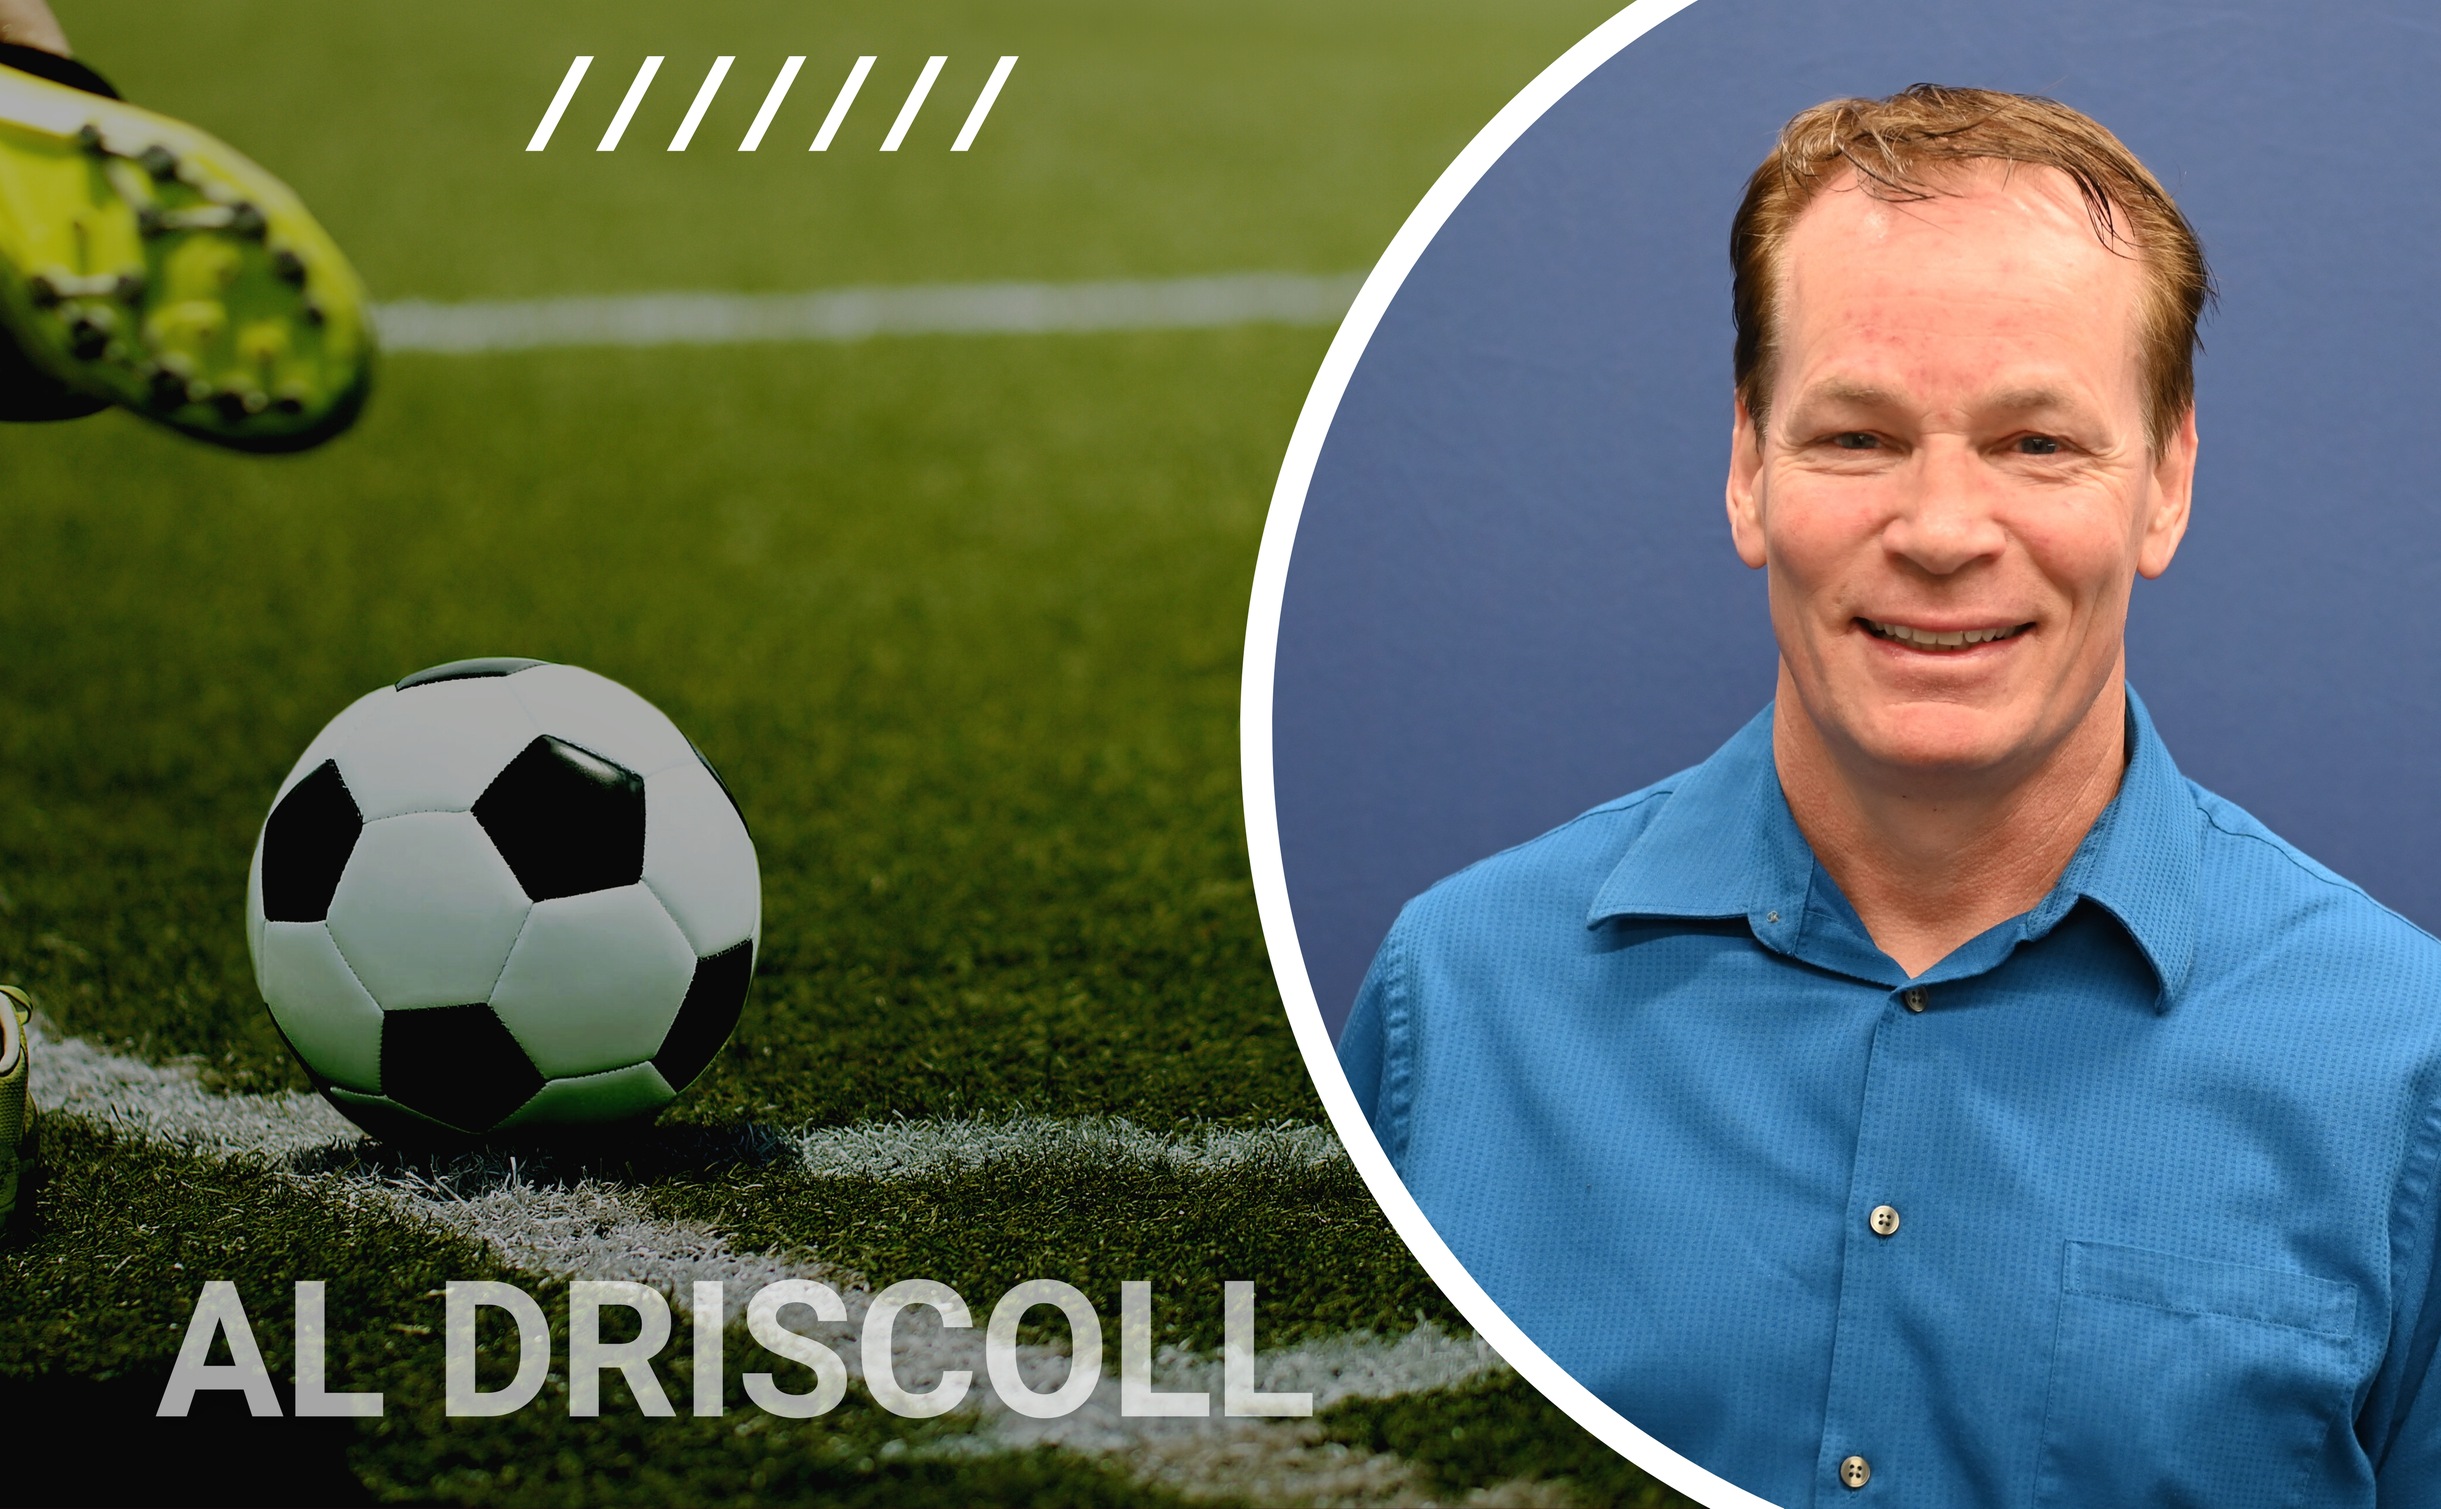 MCC hires Al Driscoll as new Head Women's Soccer Coach